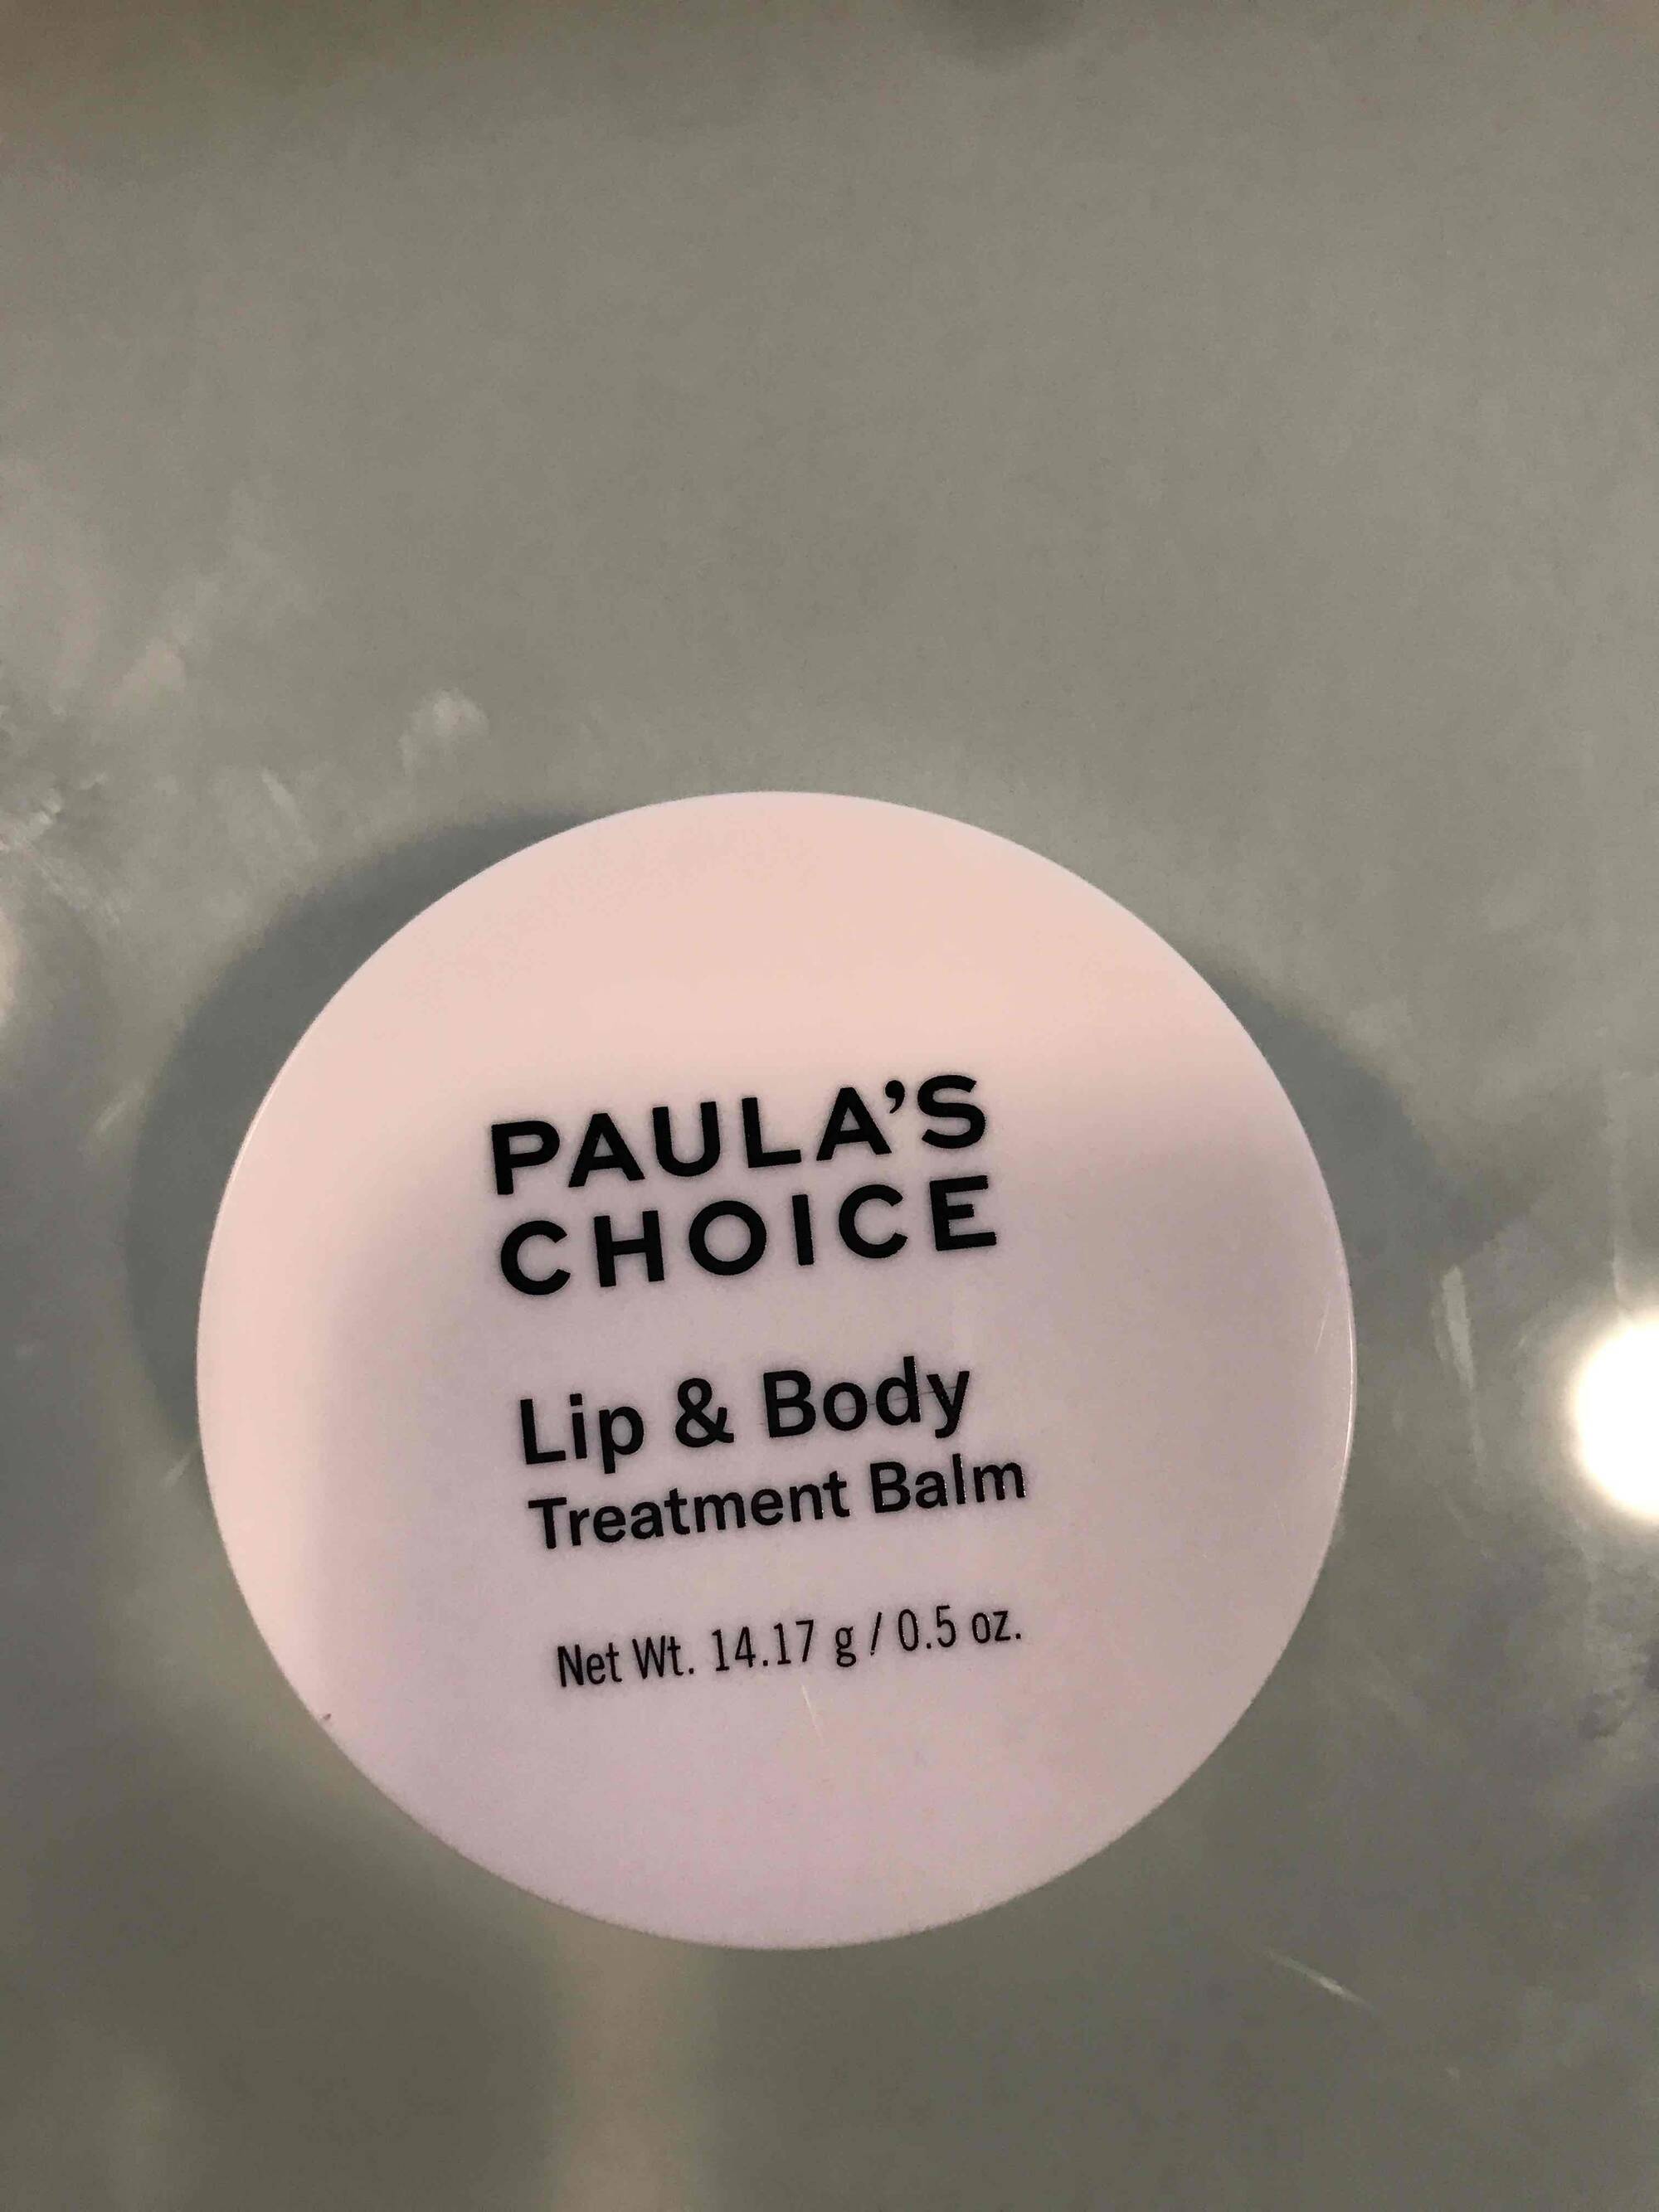 PAULA'S CHOICE - Lip & body treatment balm